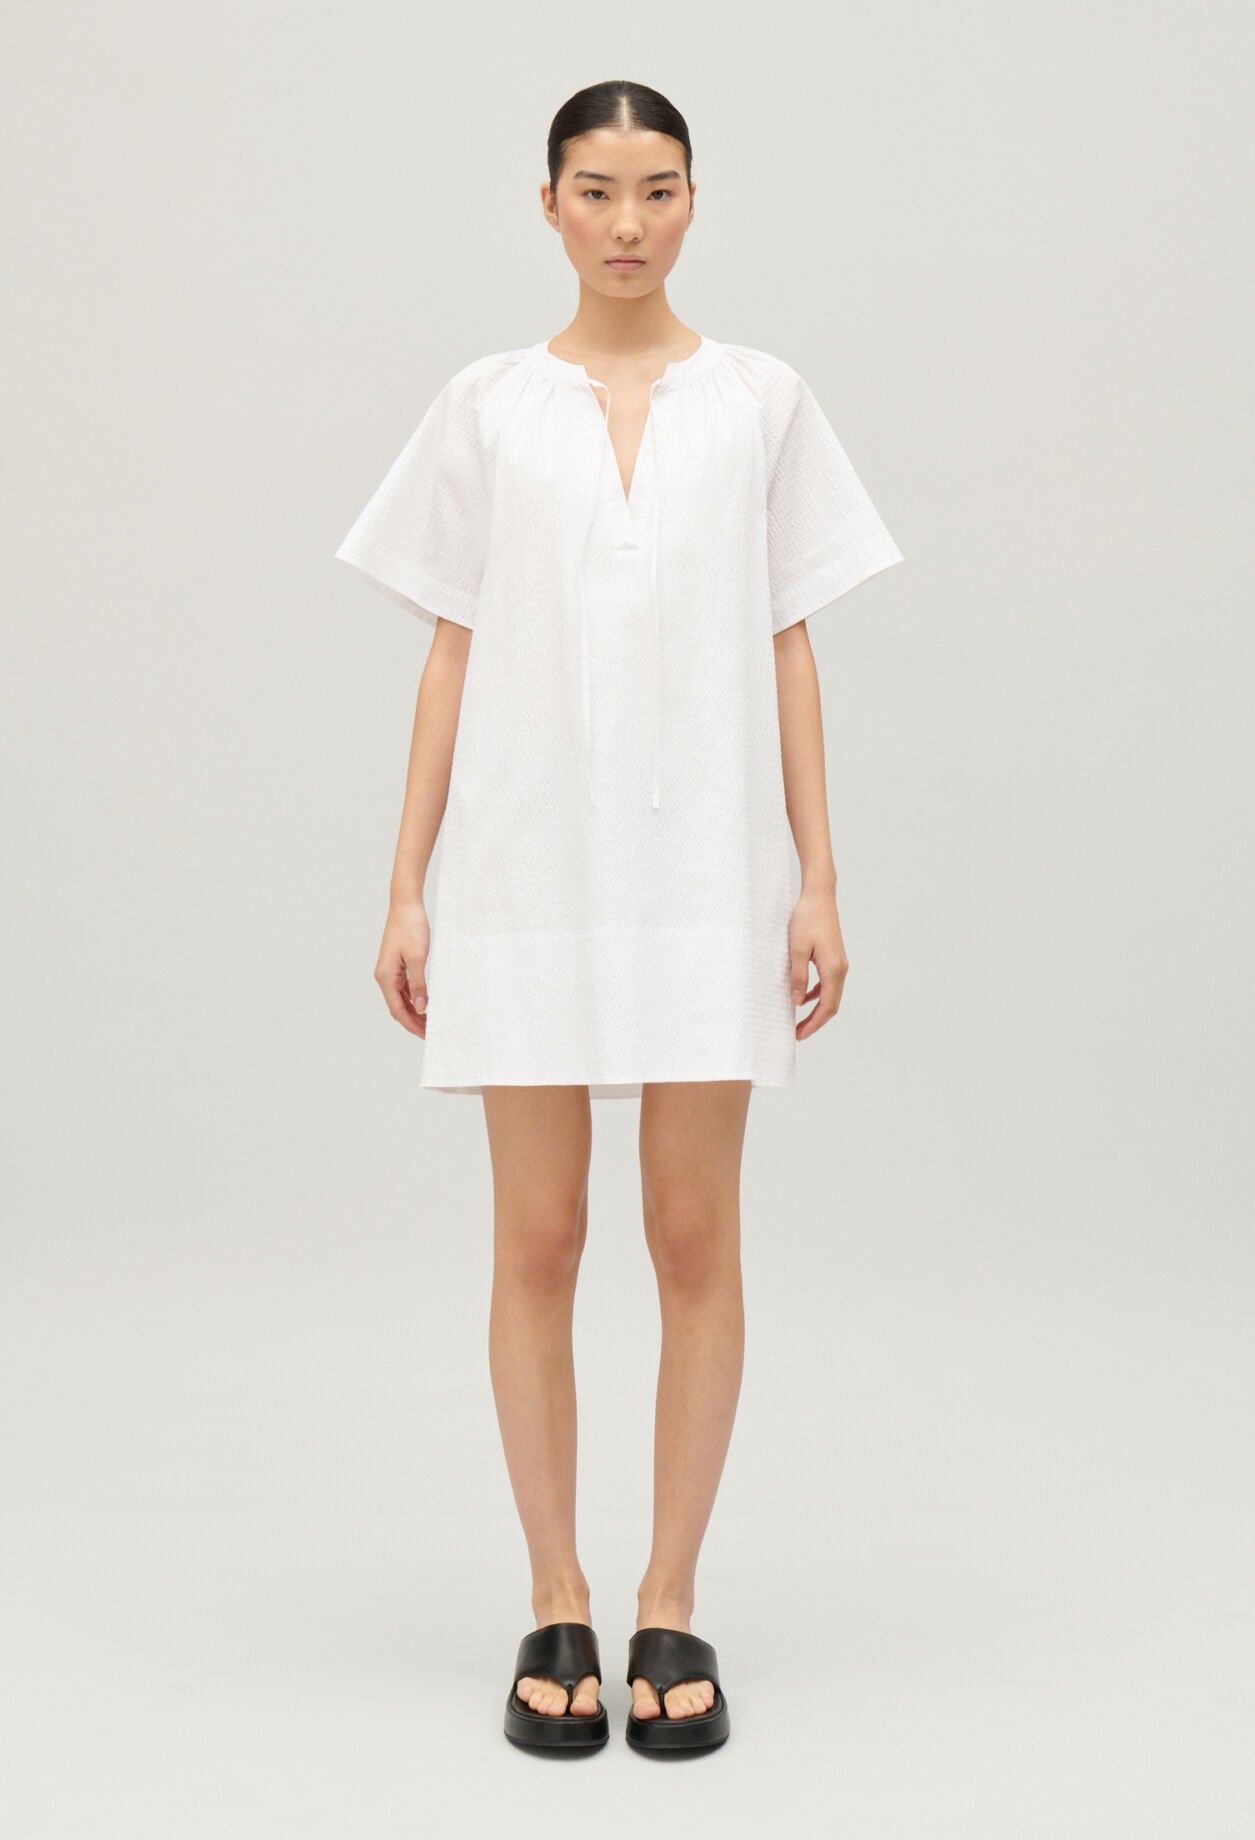 Short white lace-up dress